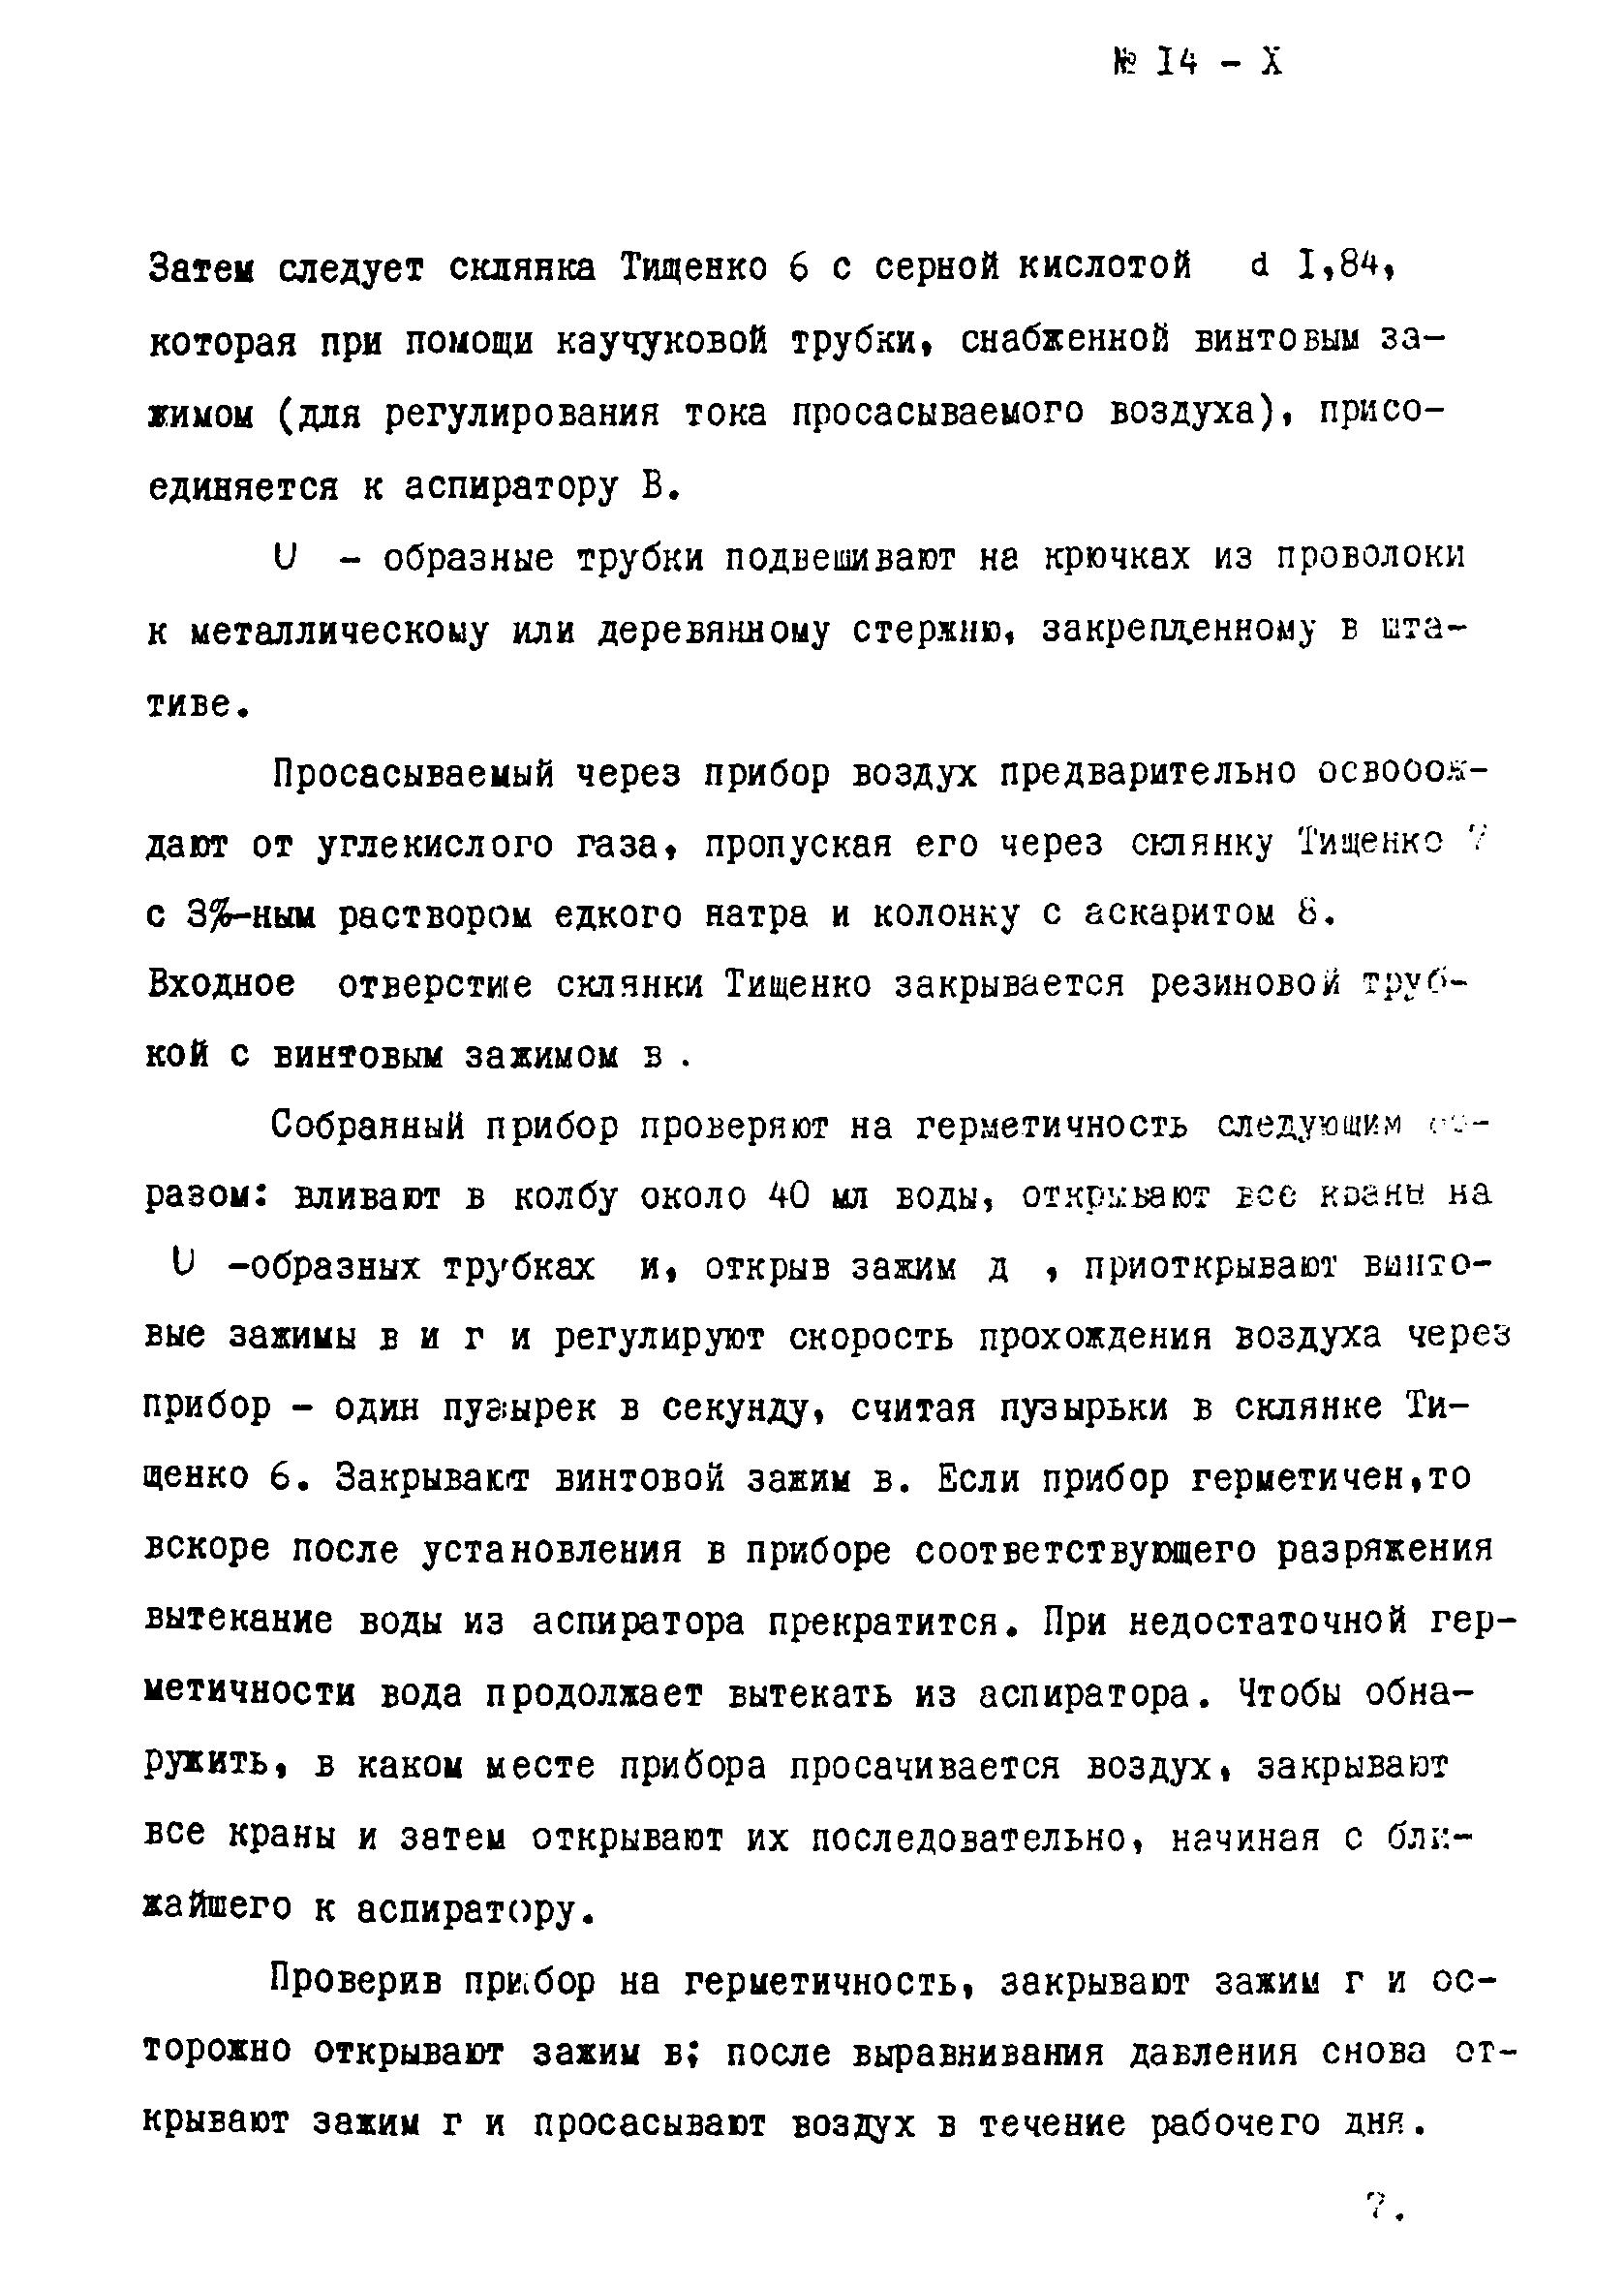 Инструкция НСАМ 14-Х